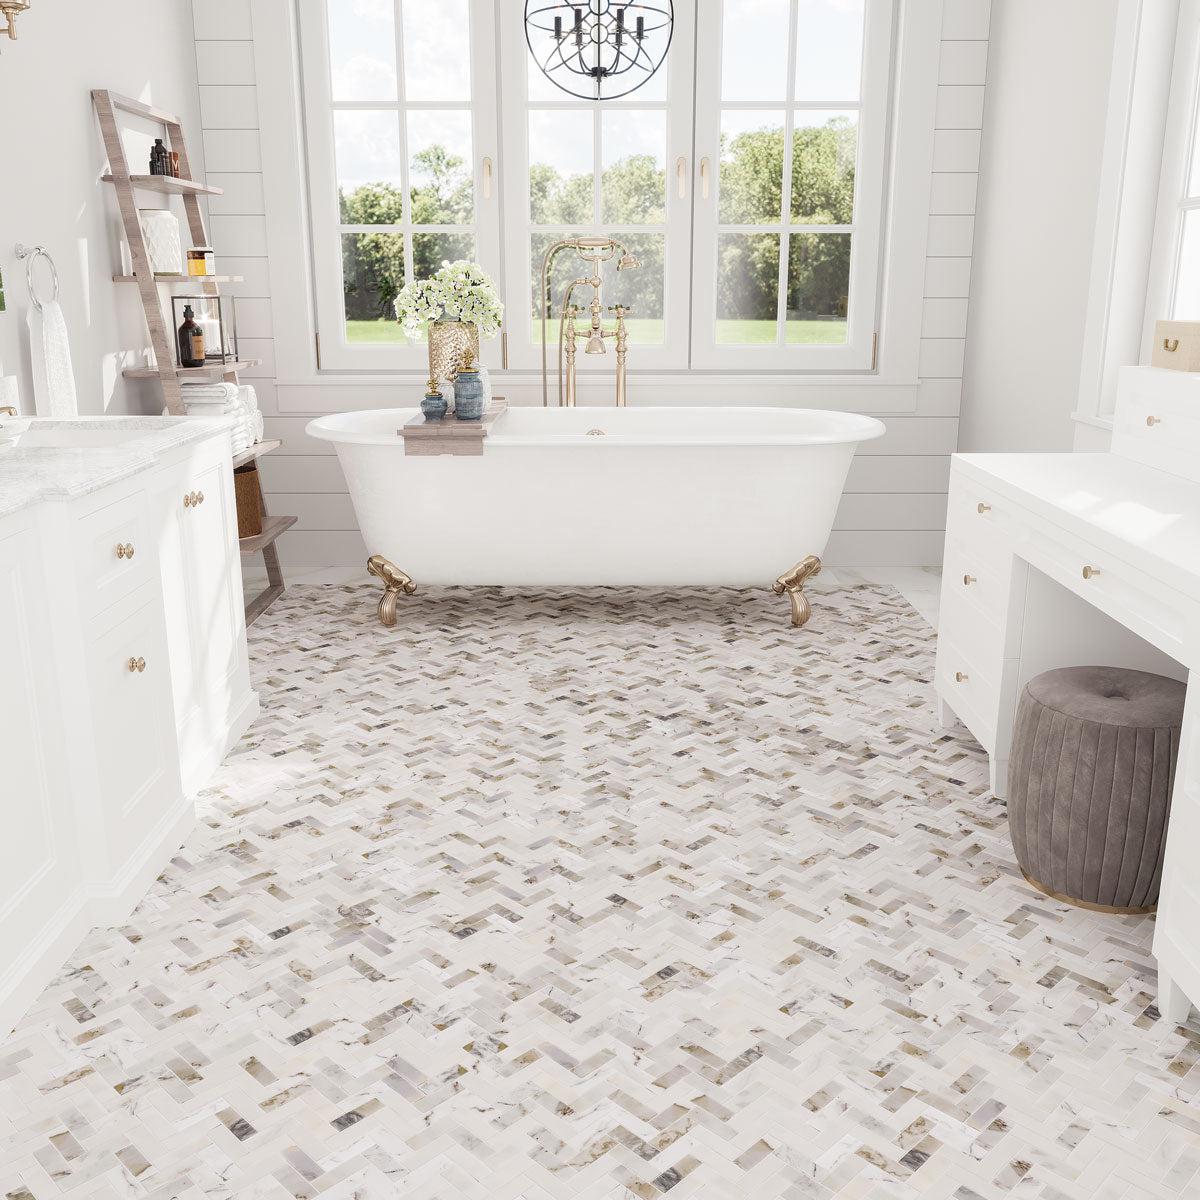 White and Gold farmhouse bathroom with marble herringbone floor design